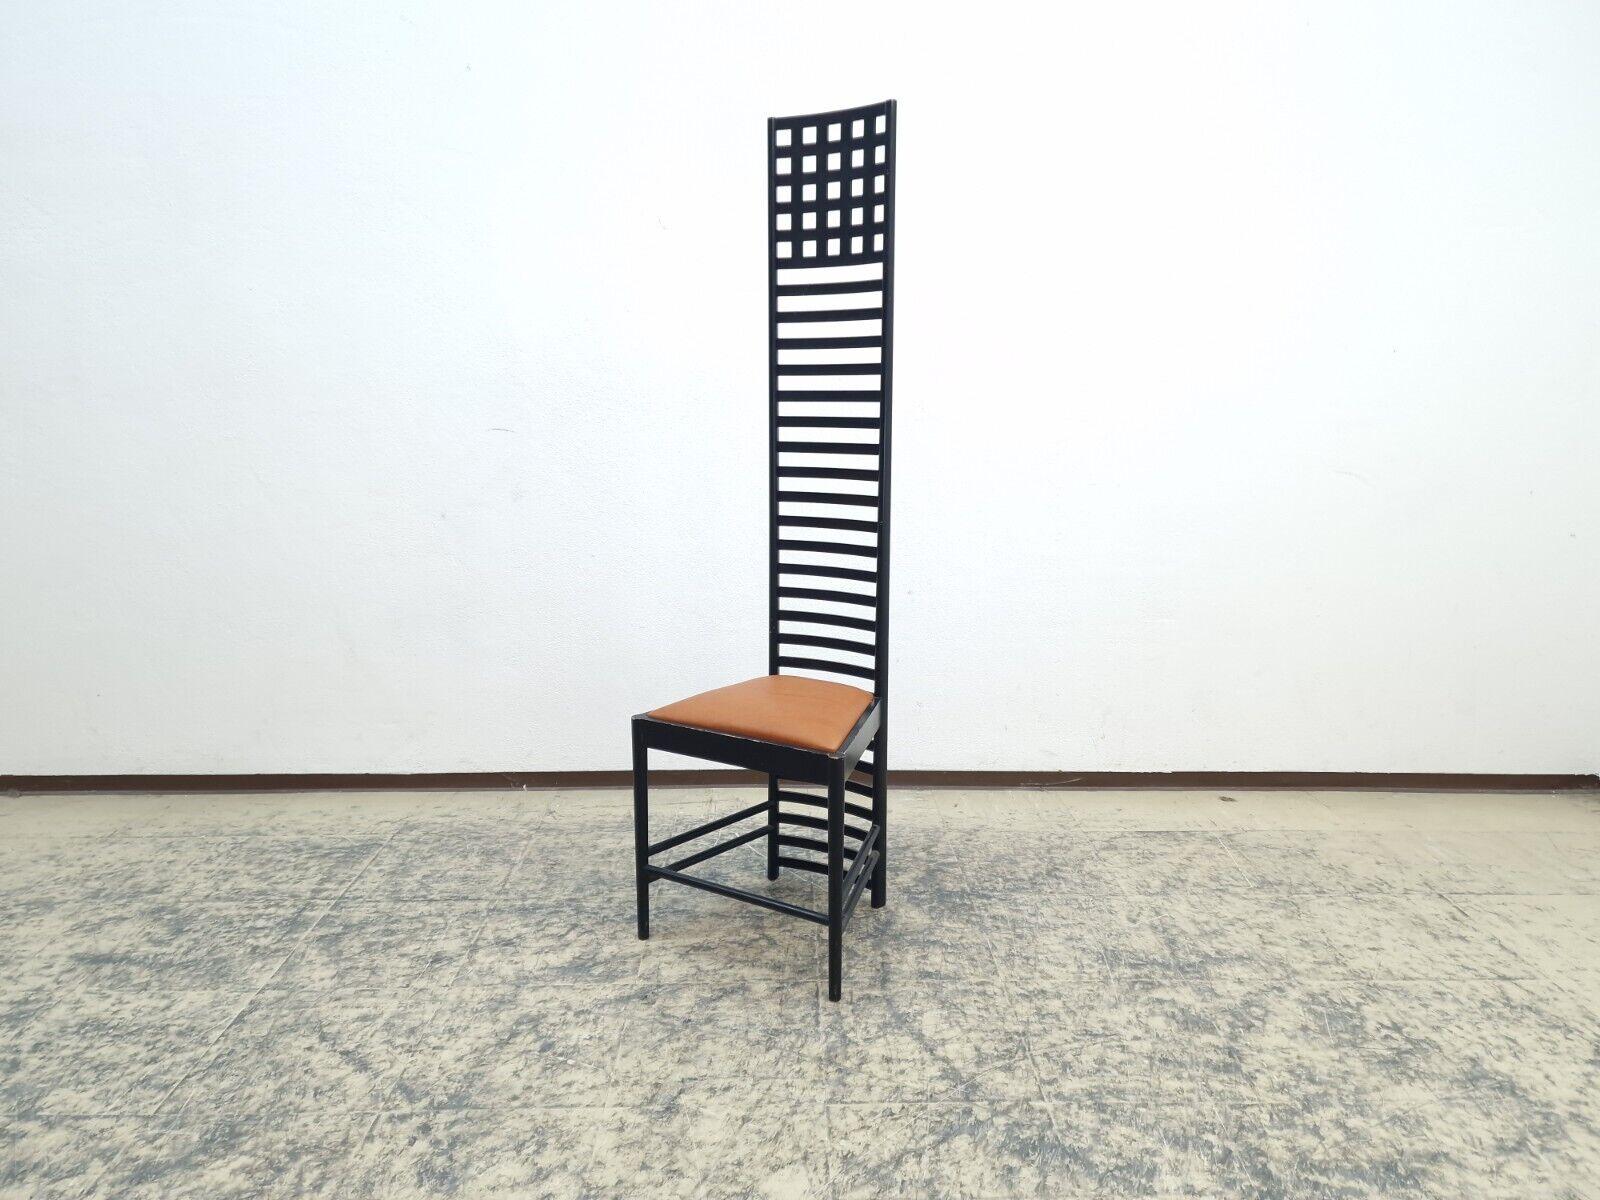 Cassina Rennie Mackintosh Holzstuhl Designerstuhl Hill House chair For Sale 4